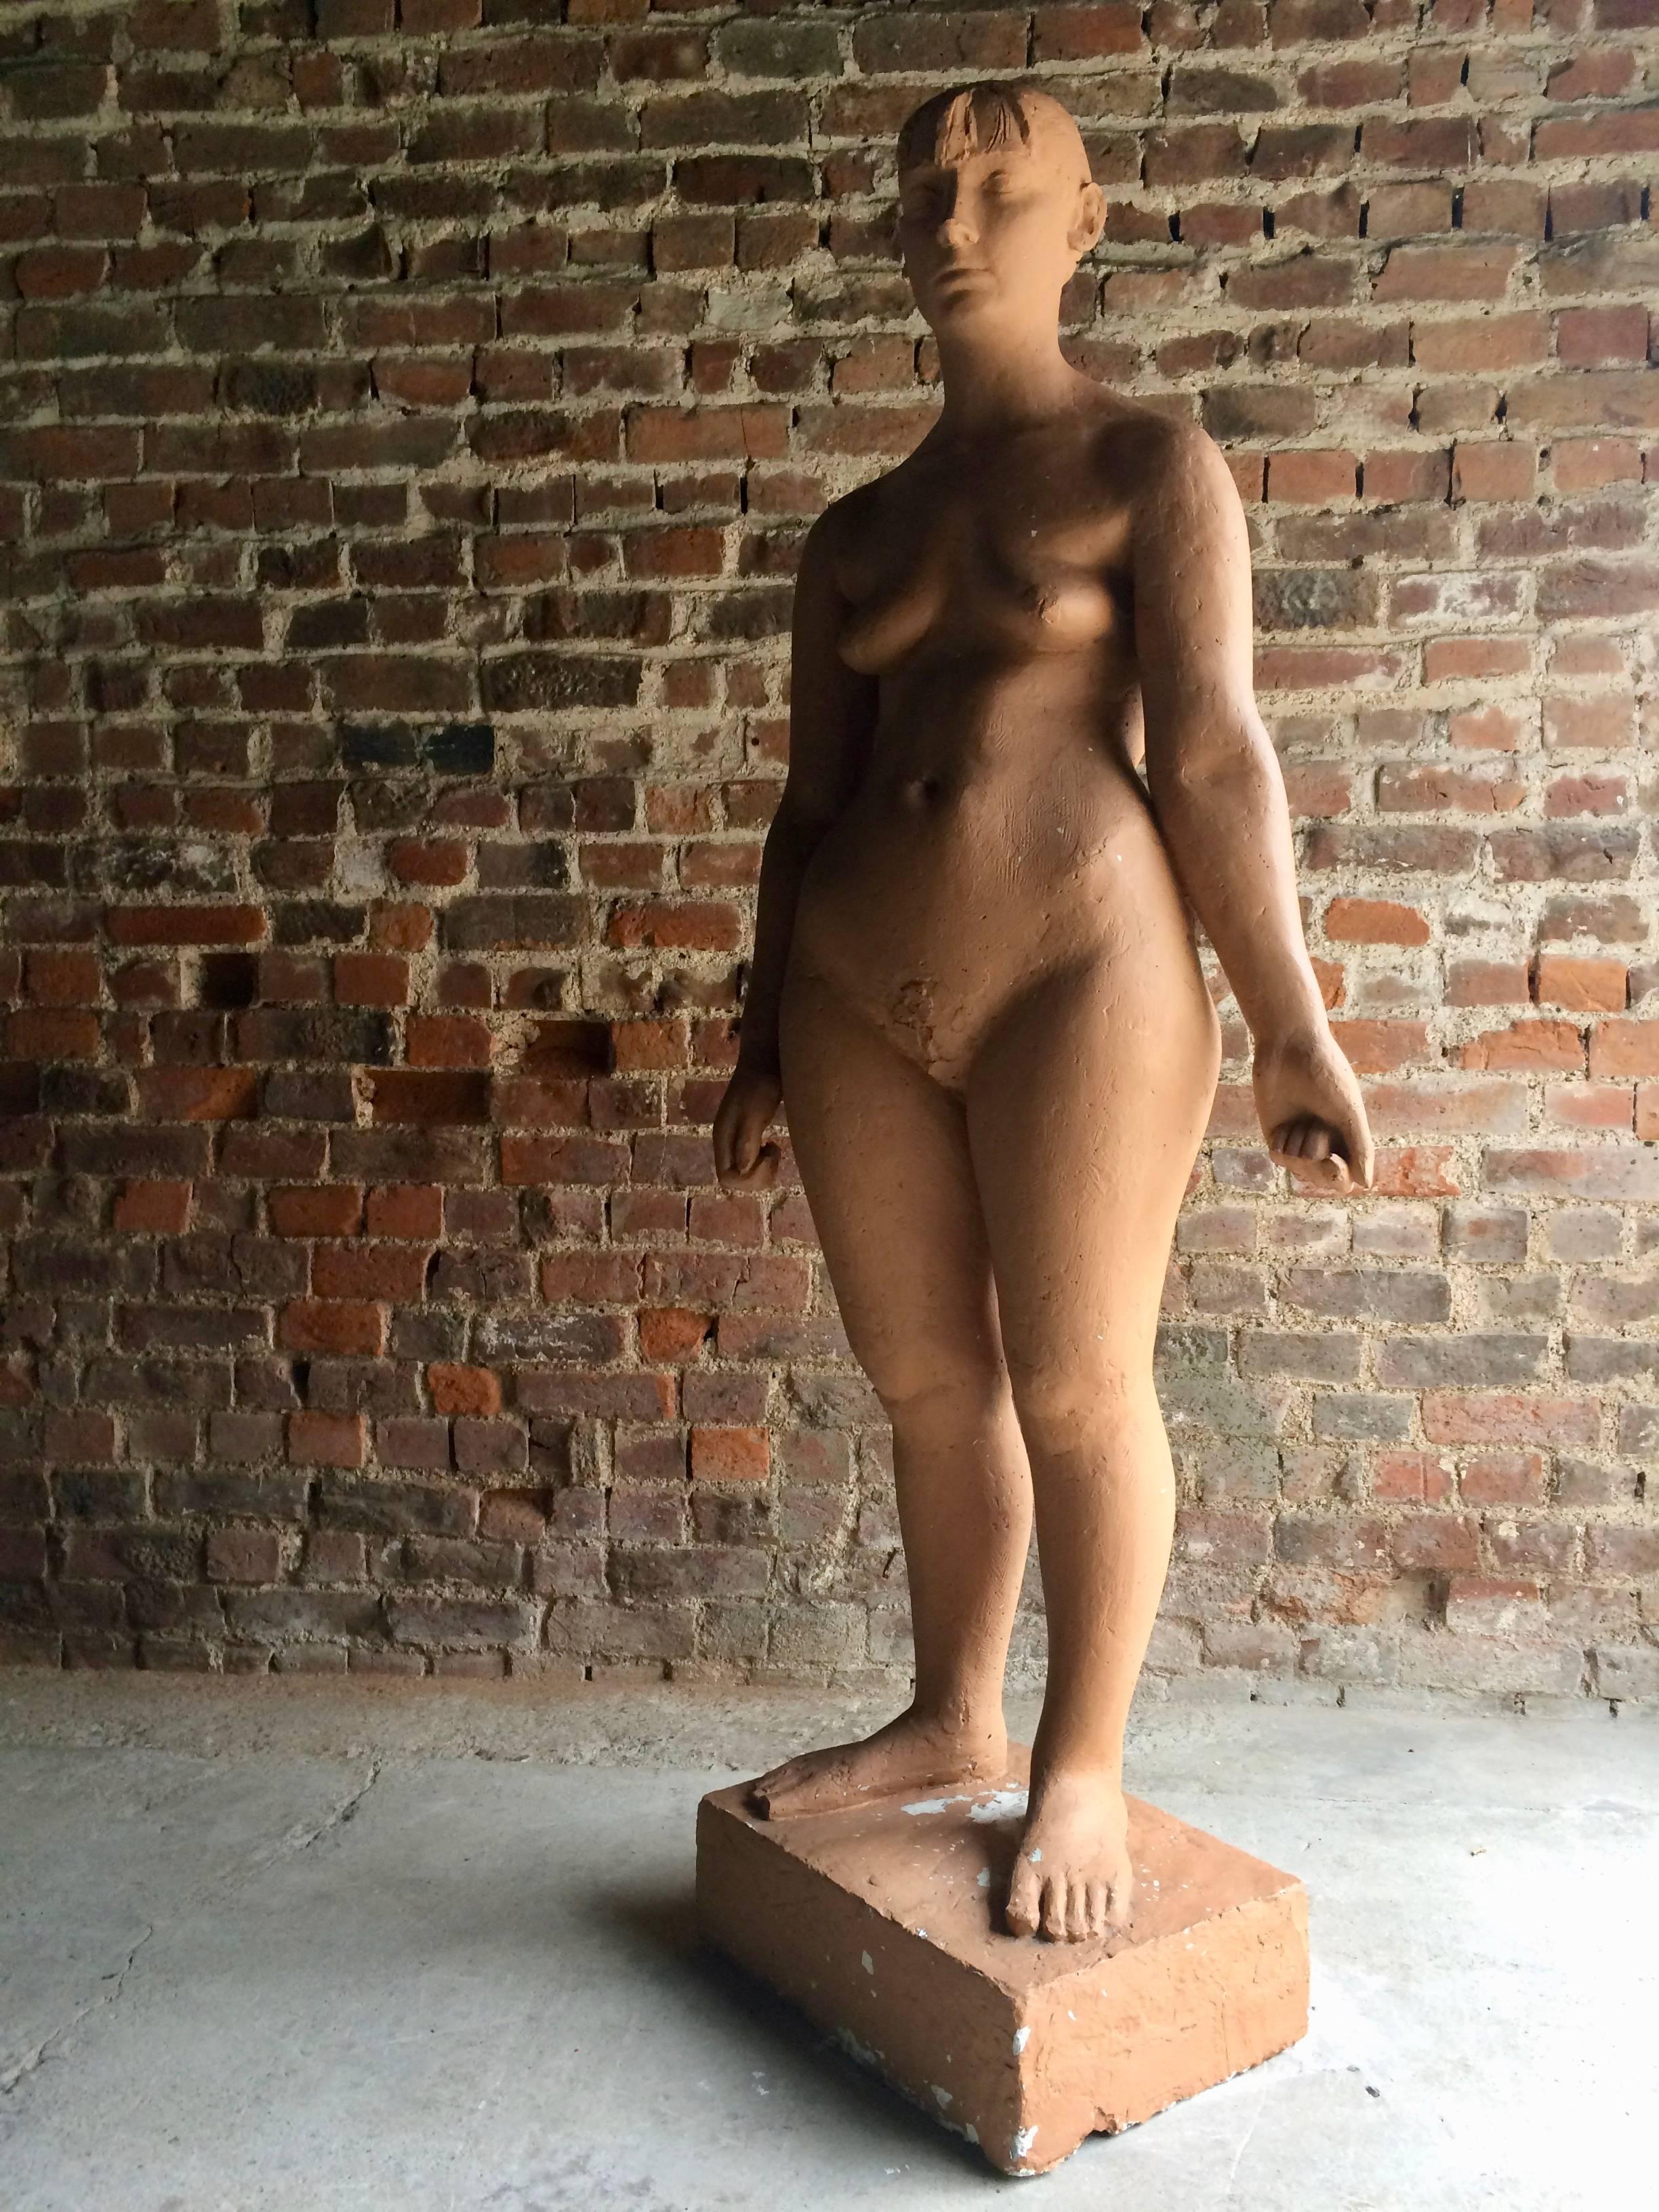 Late 20th Century Lifesize Female Nude Sculpture by Karin Jonzen British Artist